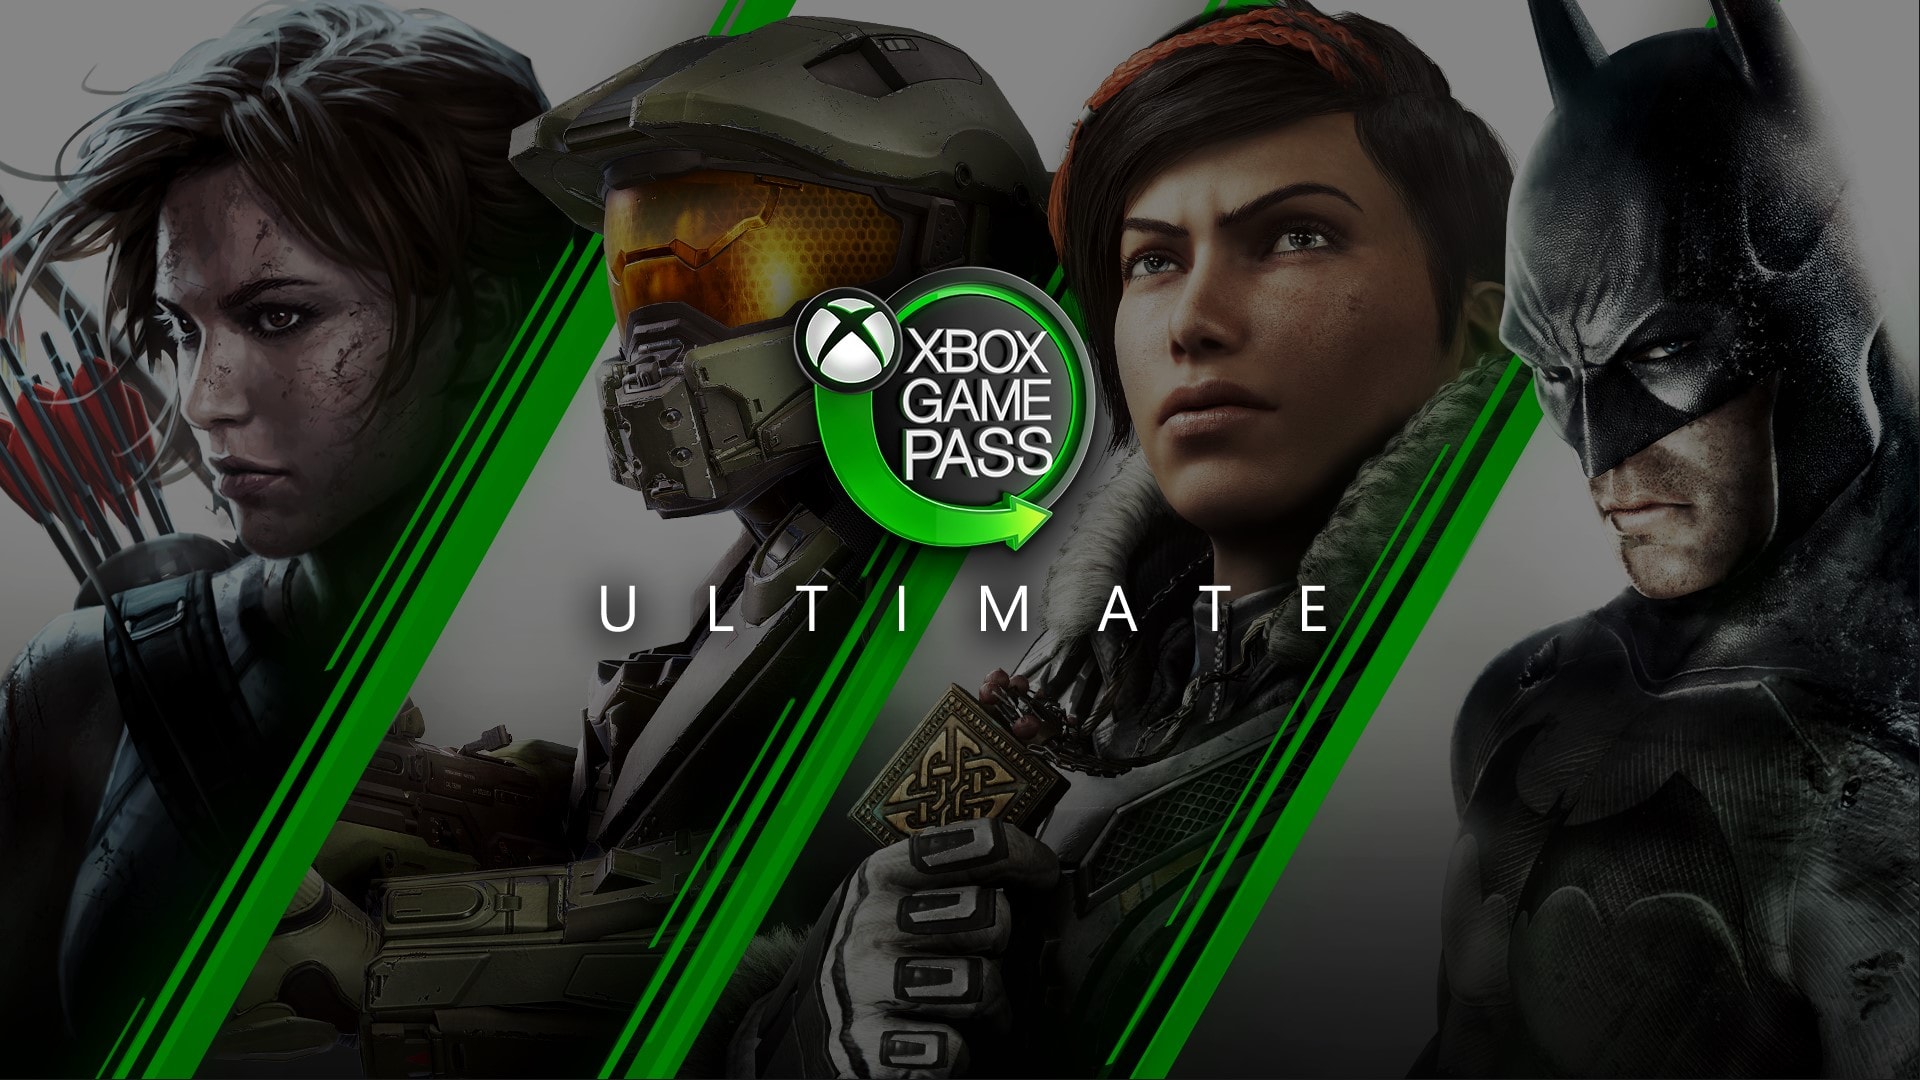 X018  Veja os 16 jogos anunciados para o Xbox Game Pass - PlayReplay